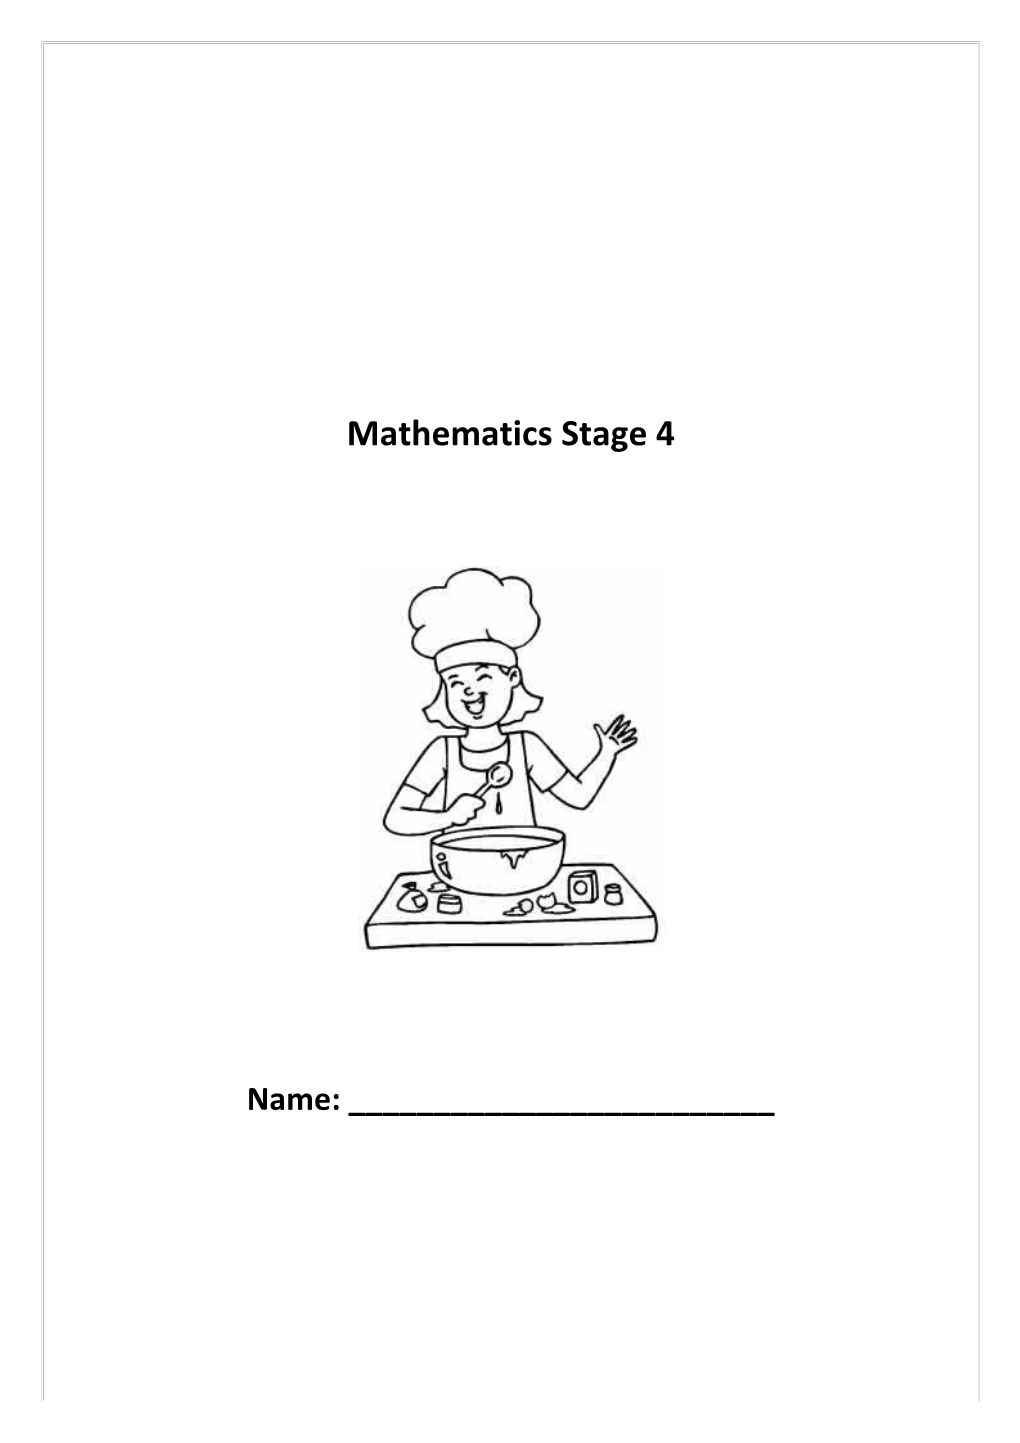 Mathematics Stage 4